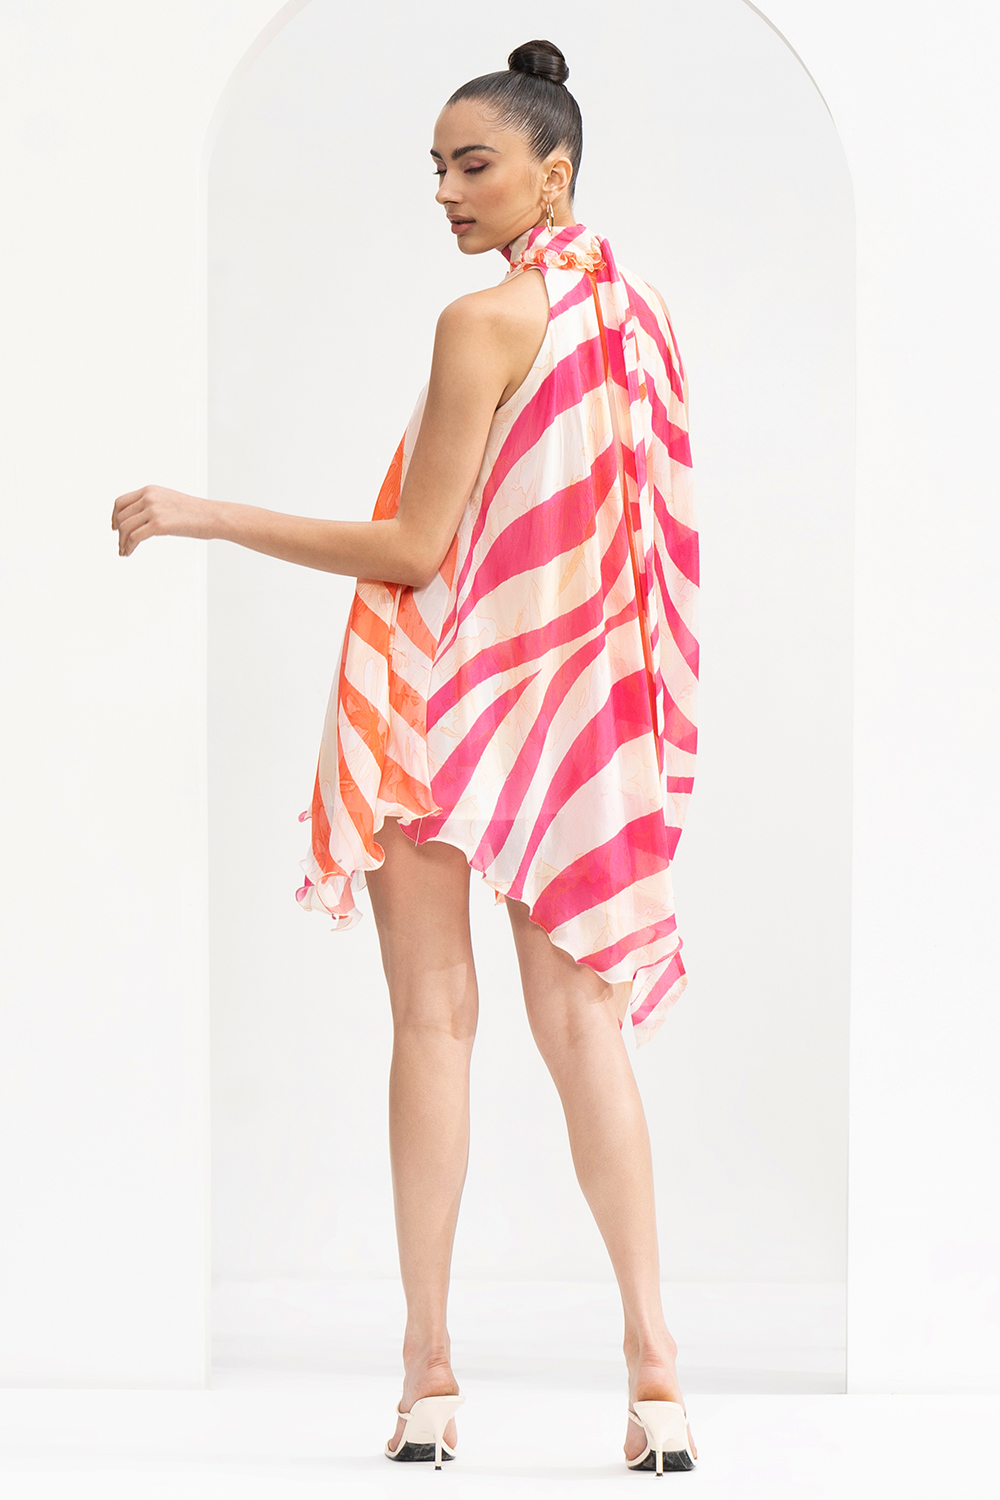 Fuchia & Coral Waves Print Blocked Chiffon Short Dress With Ruffled Detailed On The Neckline 